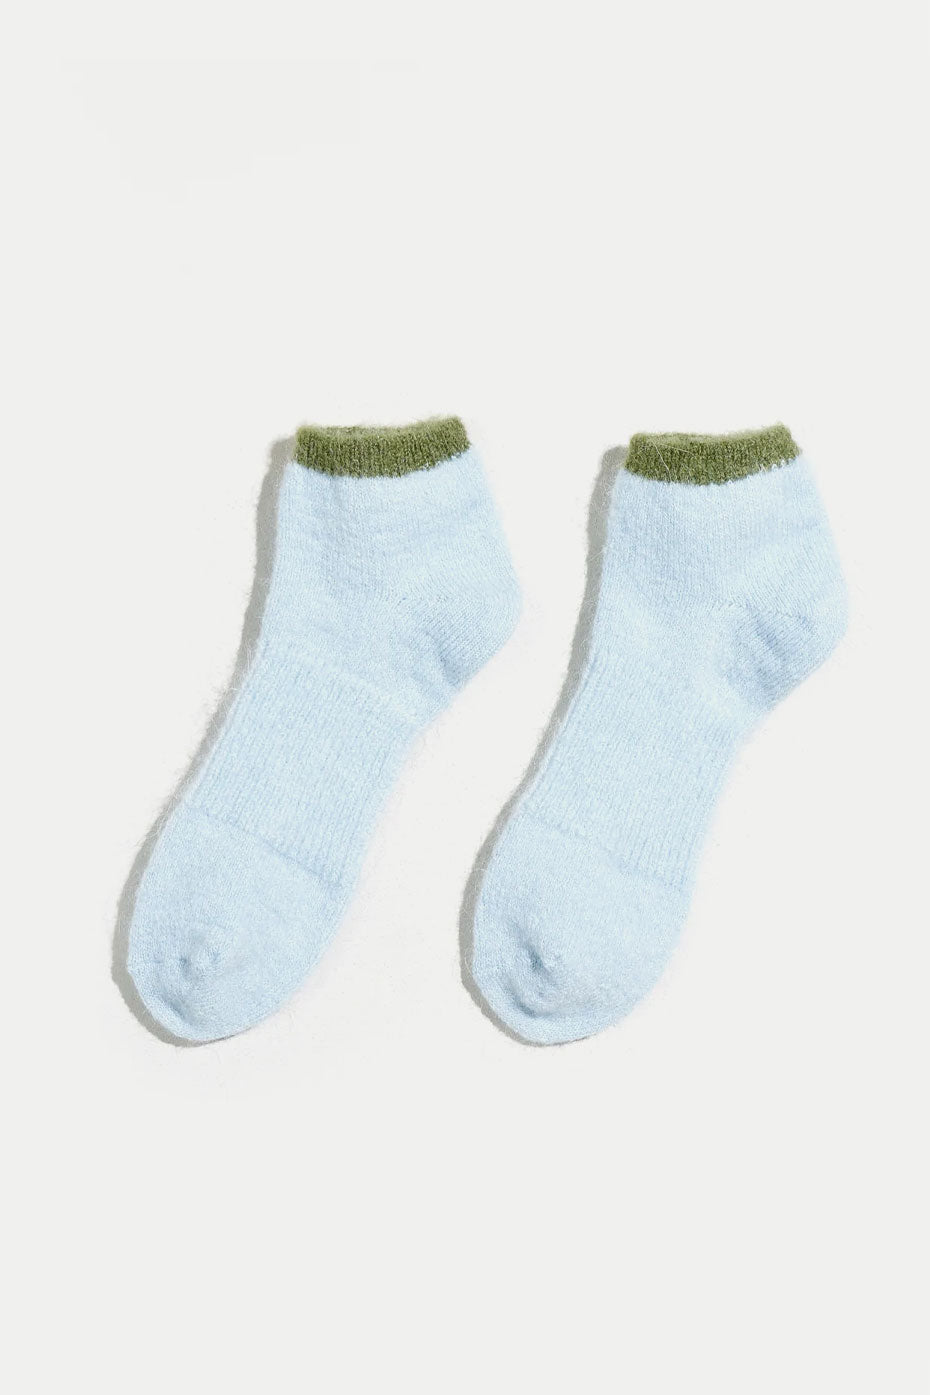 Bellerose Dream Blue Farny K1097u Socks